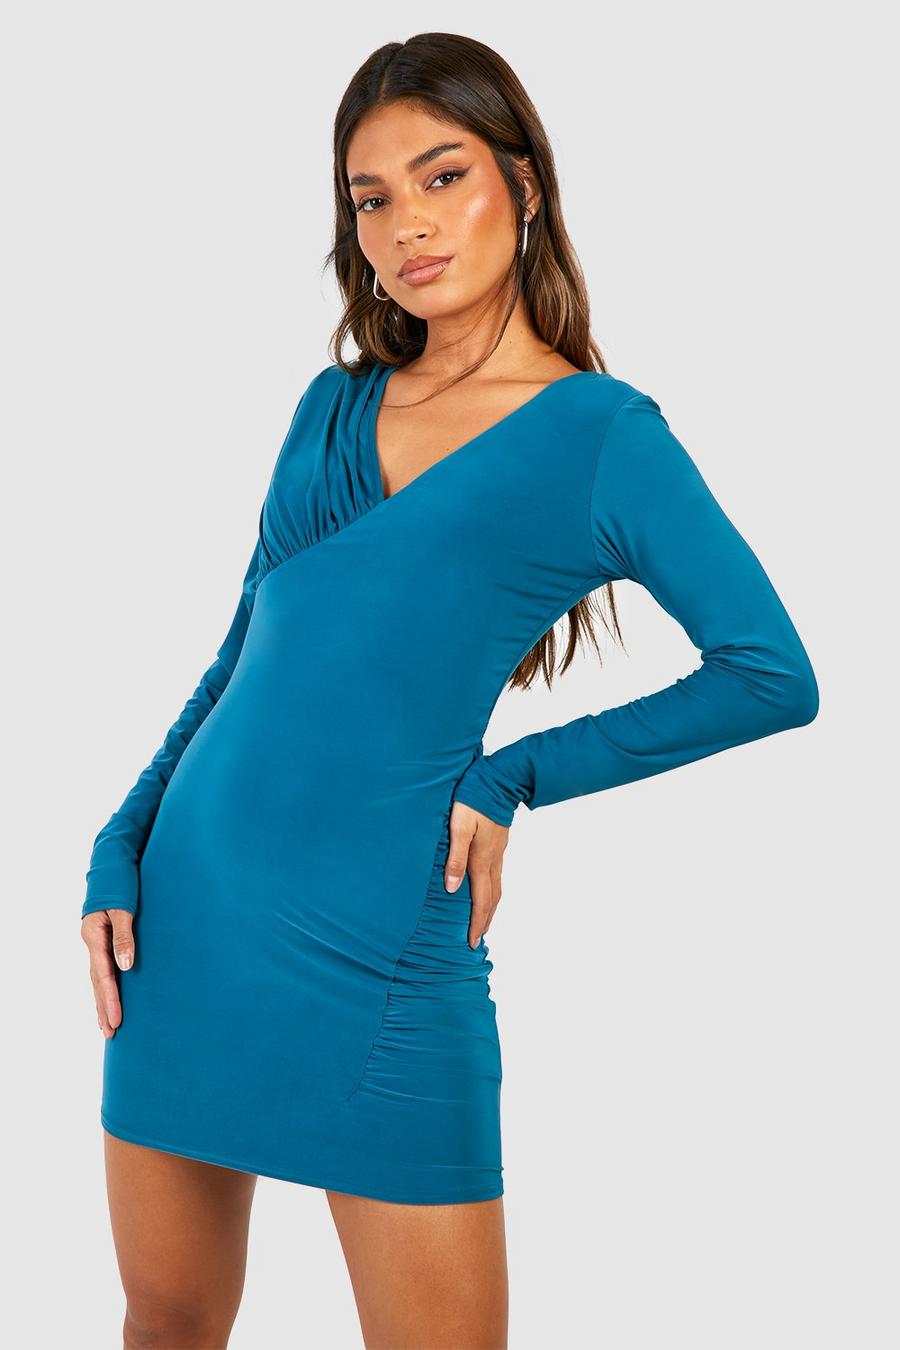 Slate blue Double Slinky Ruched Mini Dress